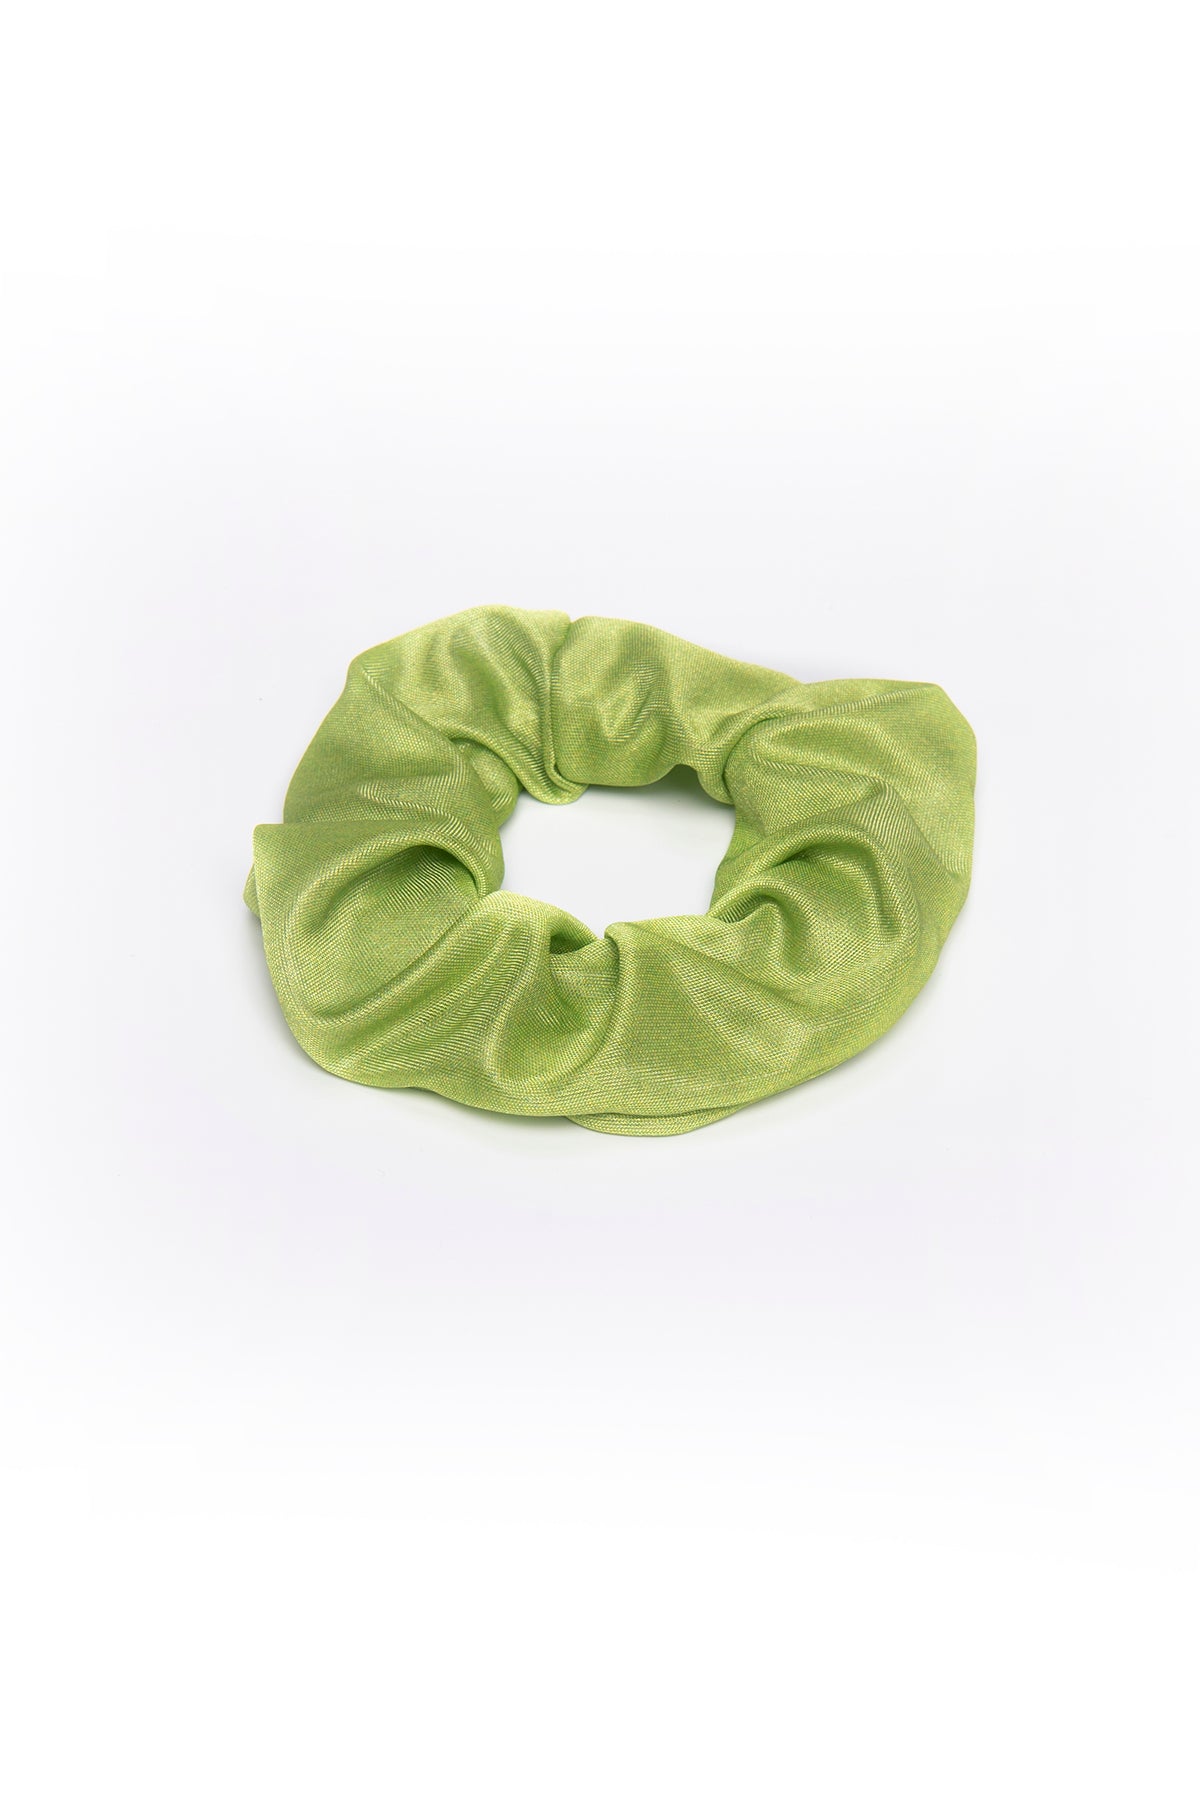 colors-scrunchie-set-half-full-green-2